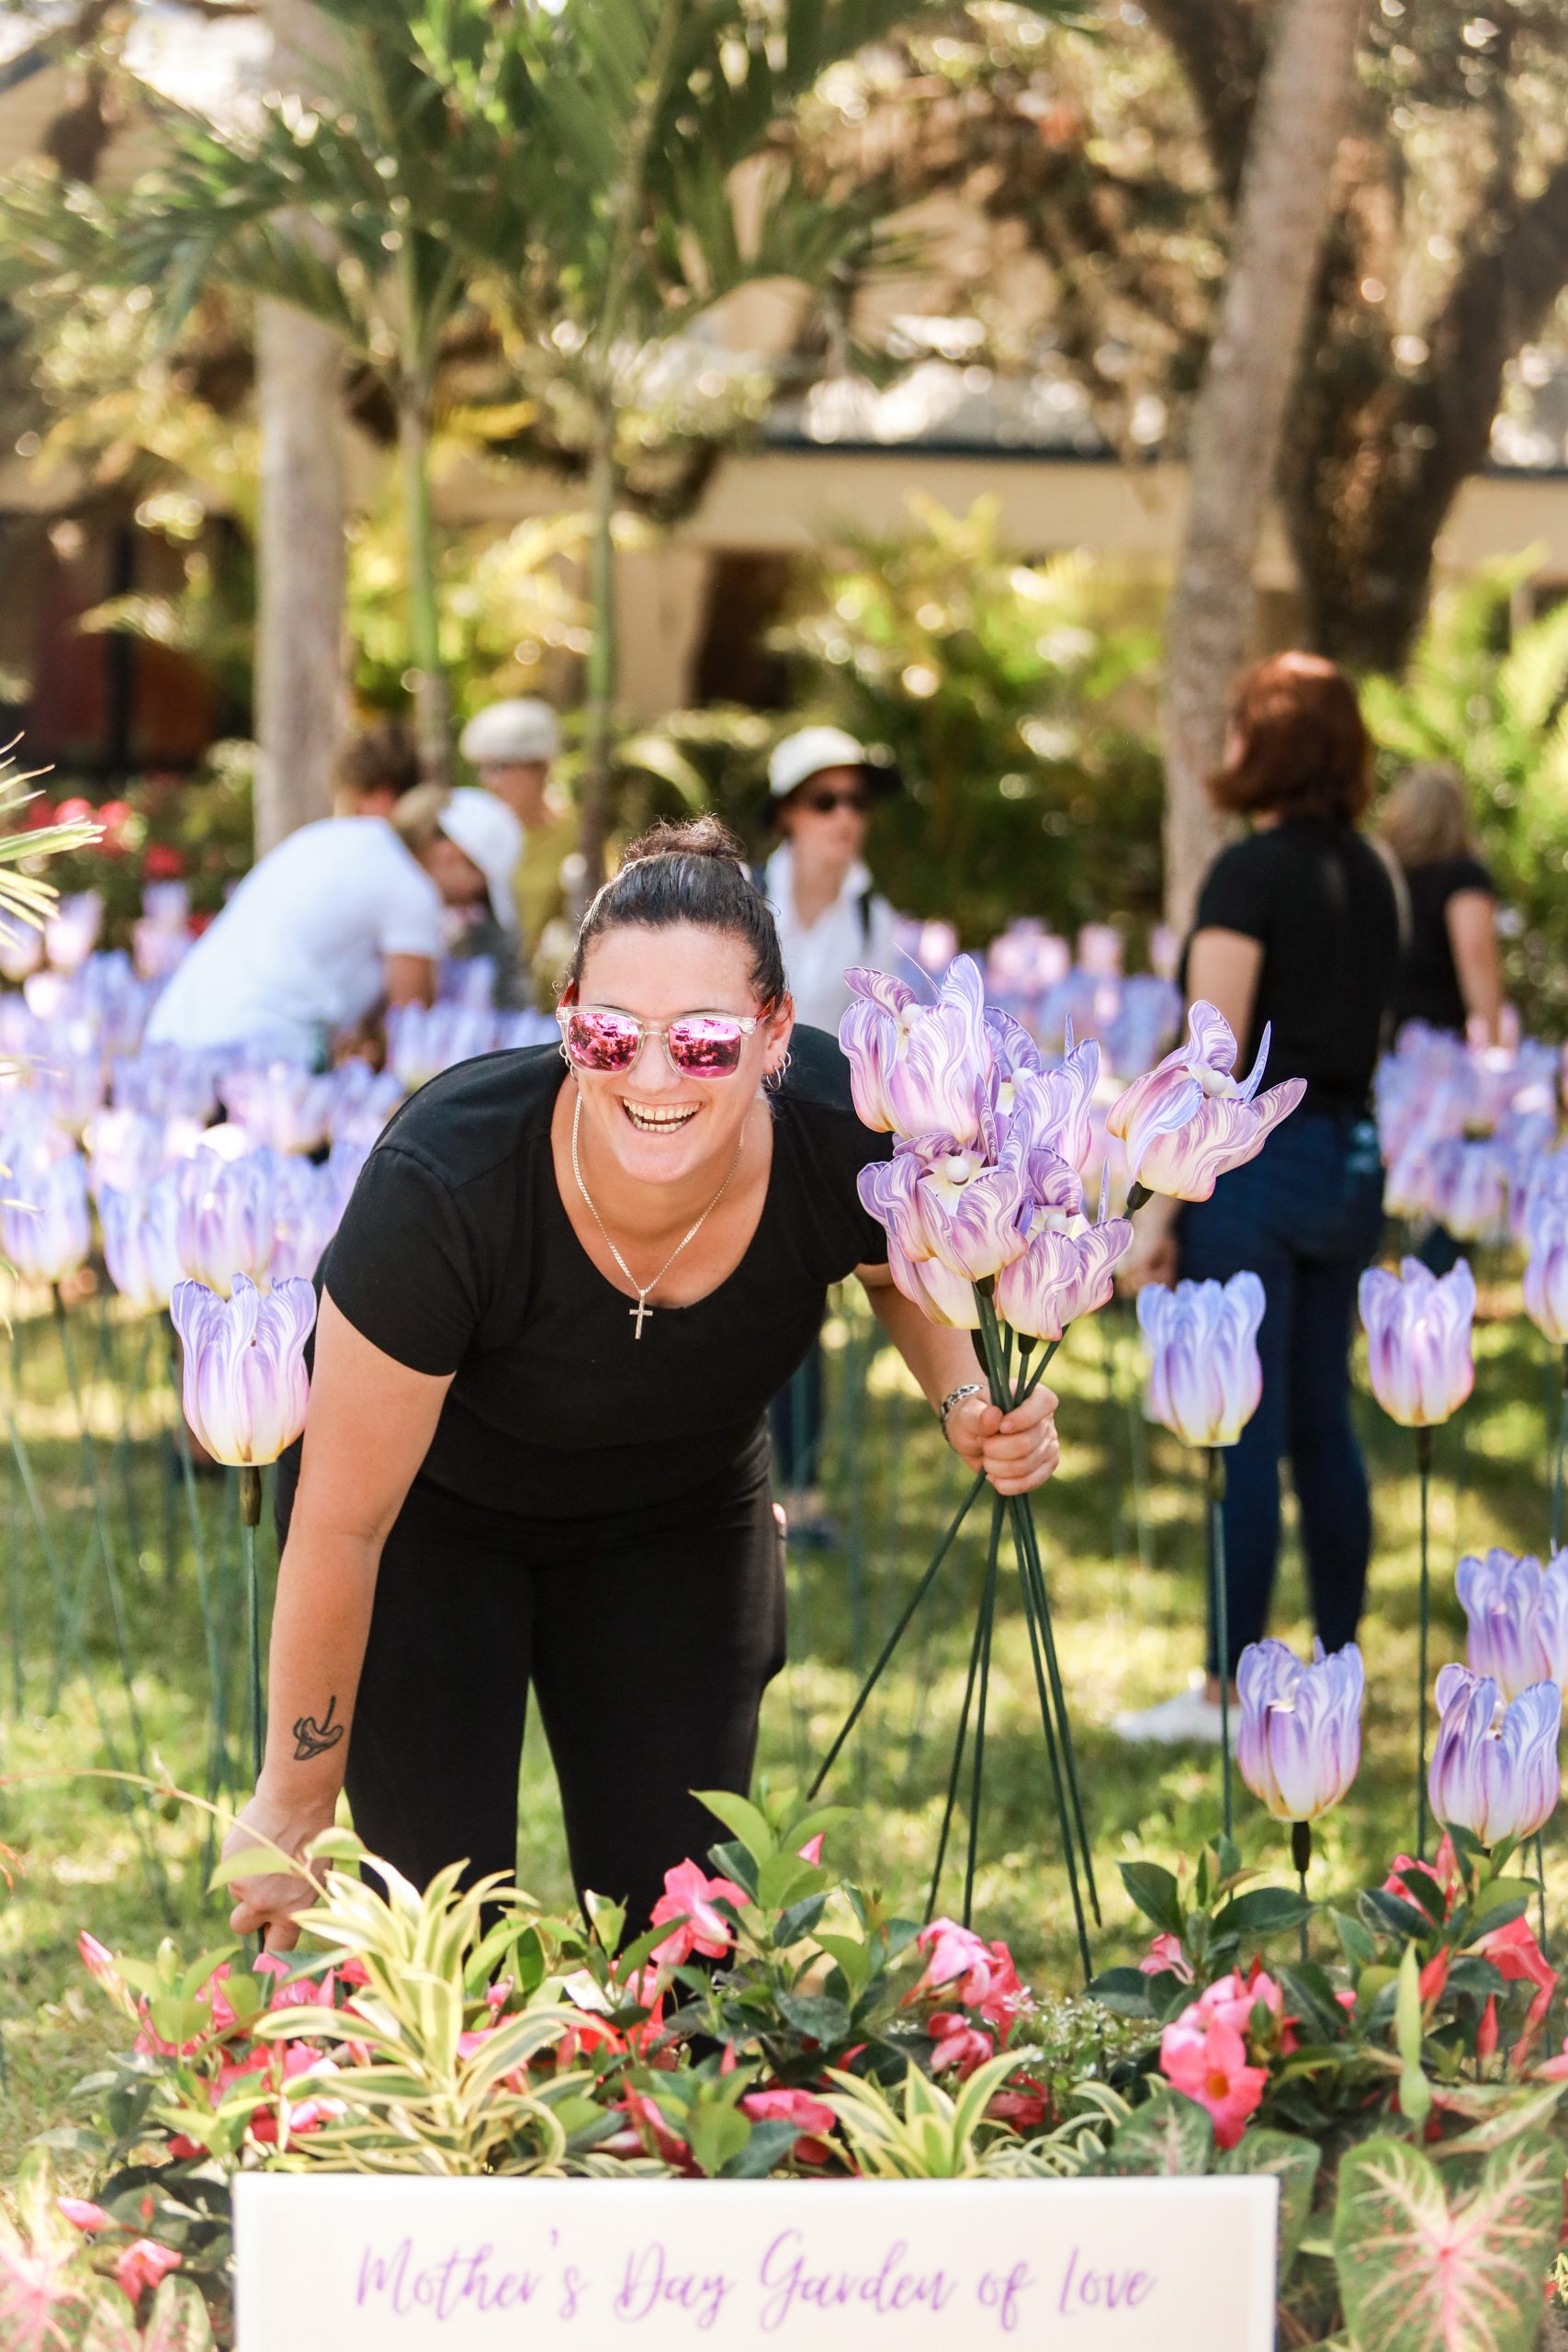 IRCHSC Mother’s Day Garden of Love – 1000 Lavender Tulip Pinwheels